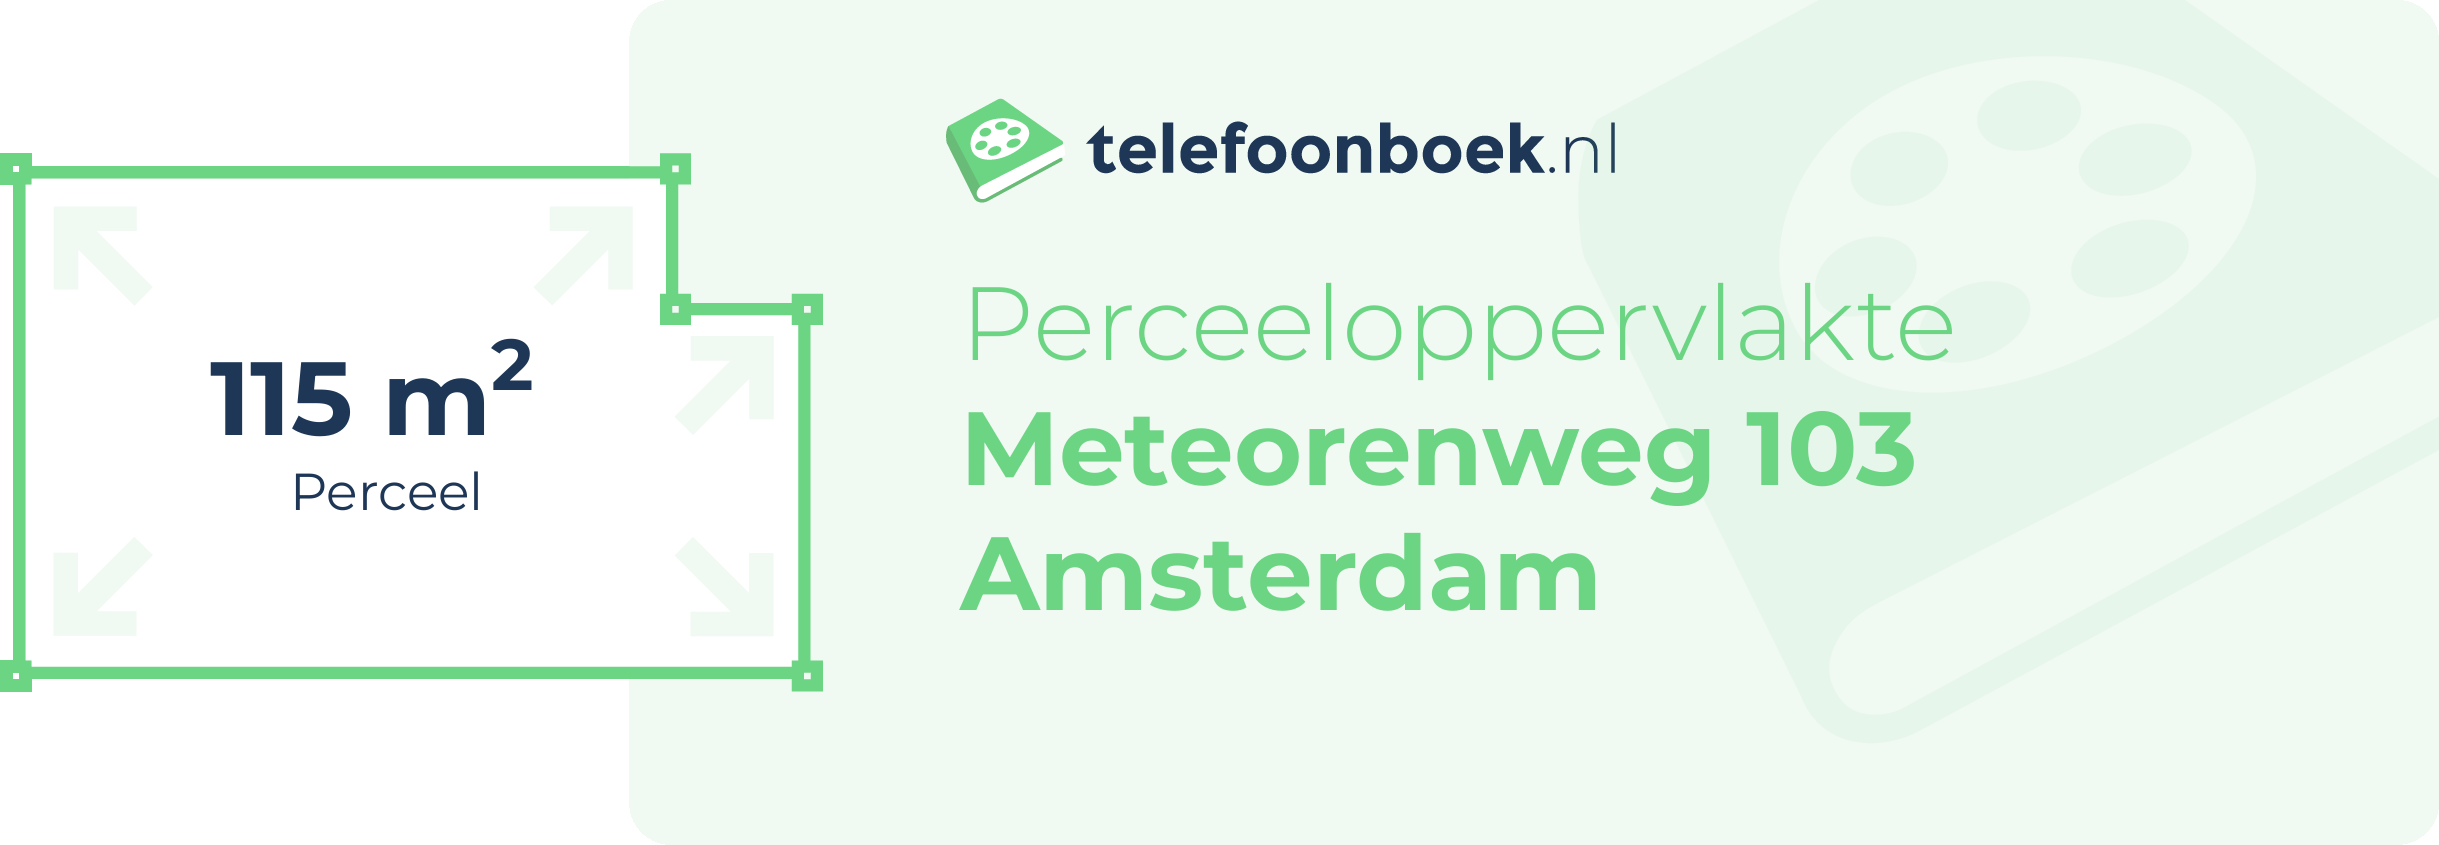 Perceeloppervlakte Meteorenweg 103 Amsterdam